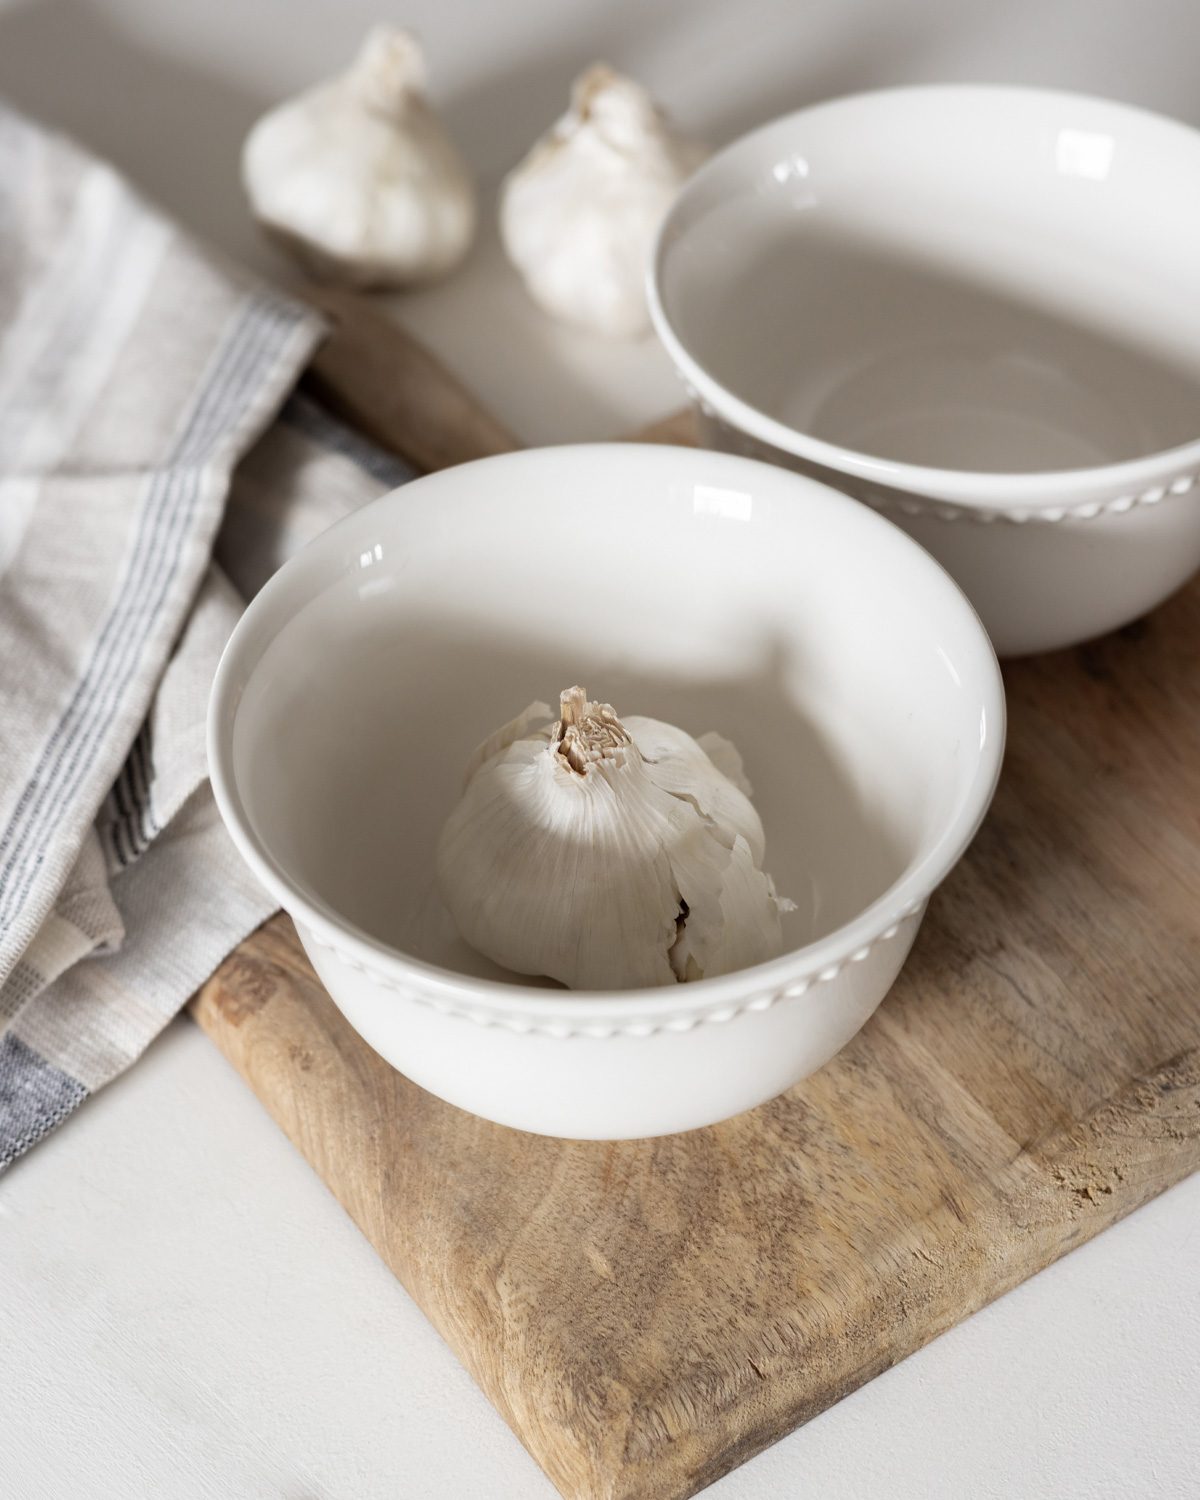 Unpeeled garlic in a bowl.